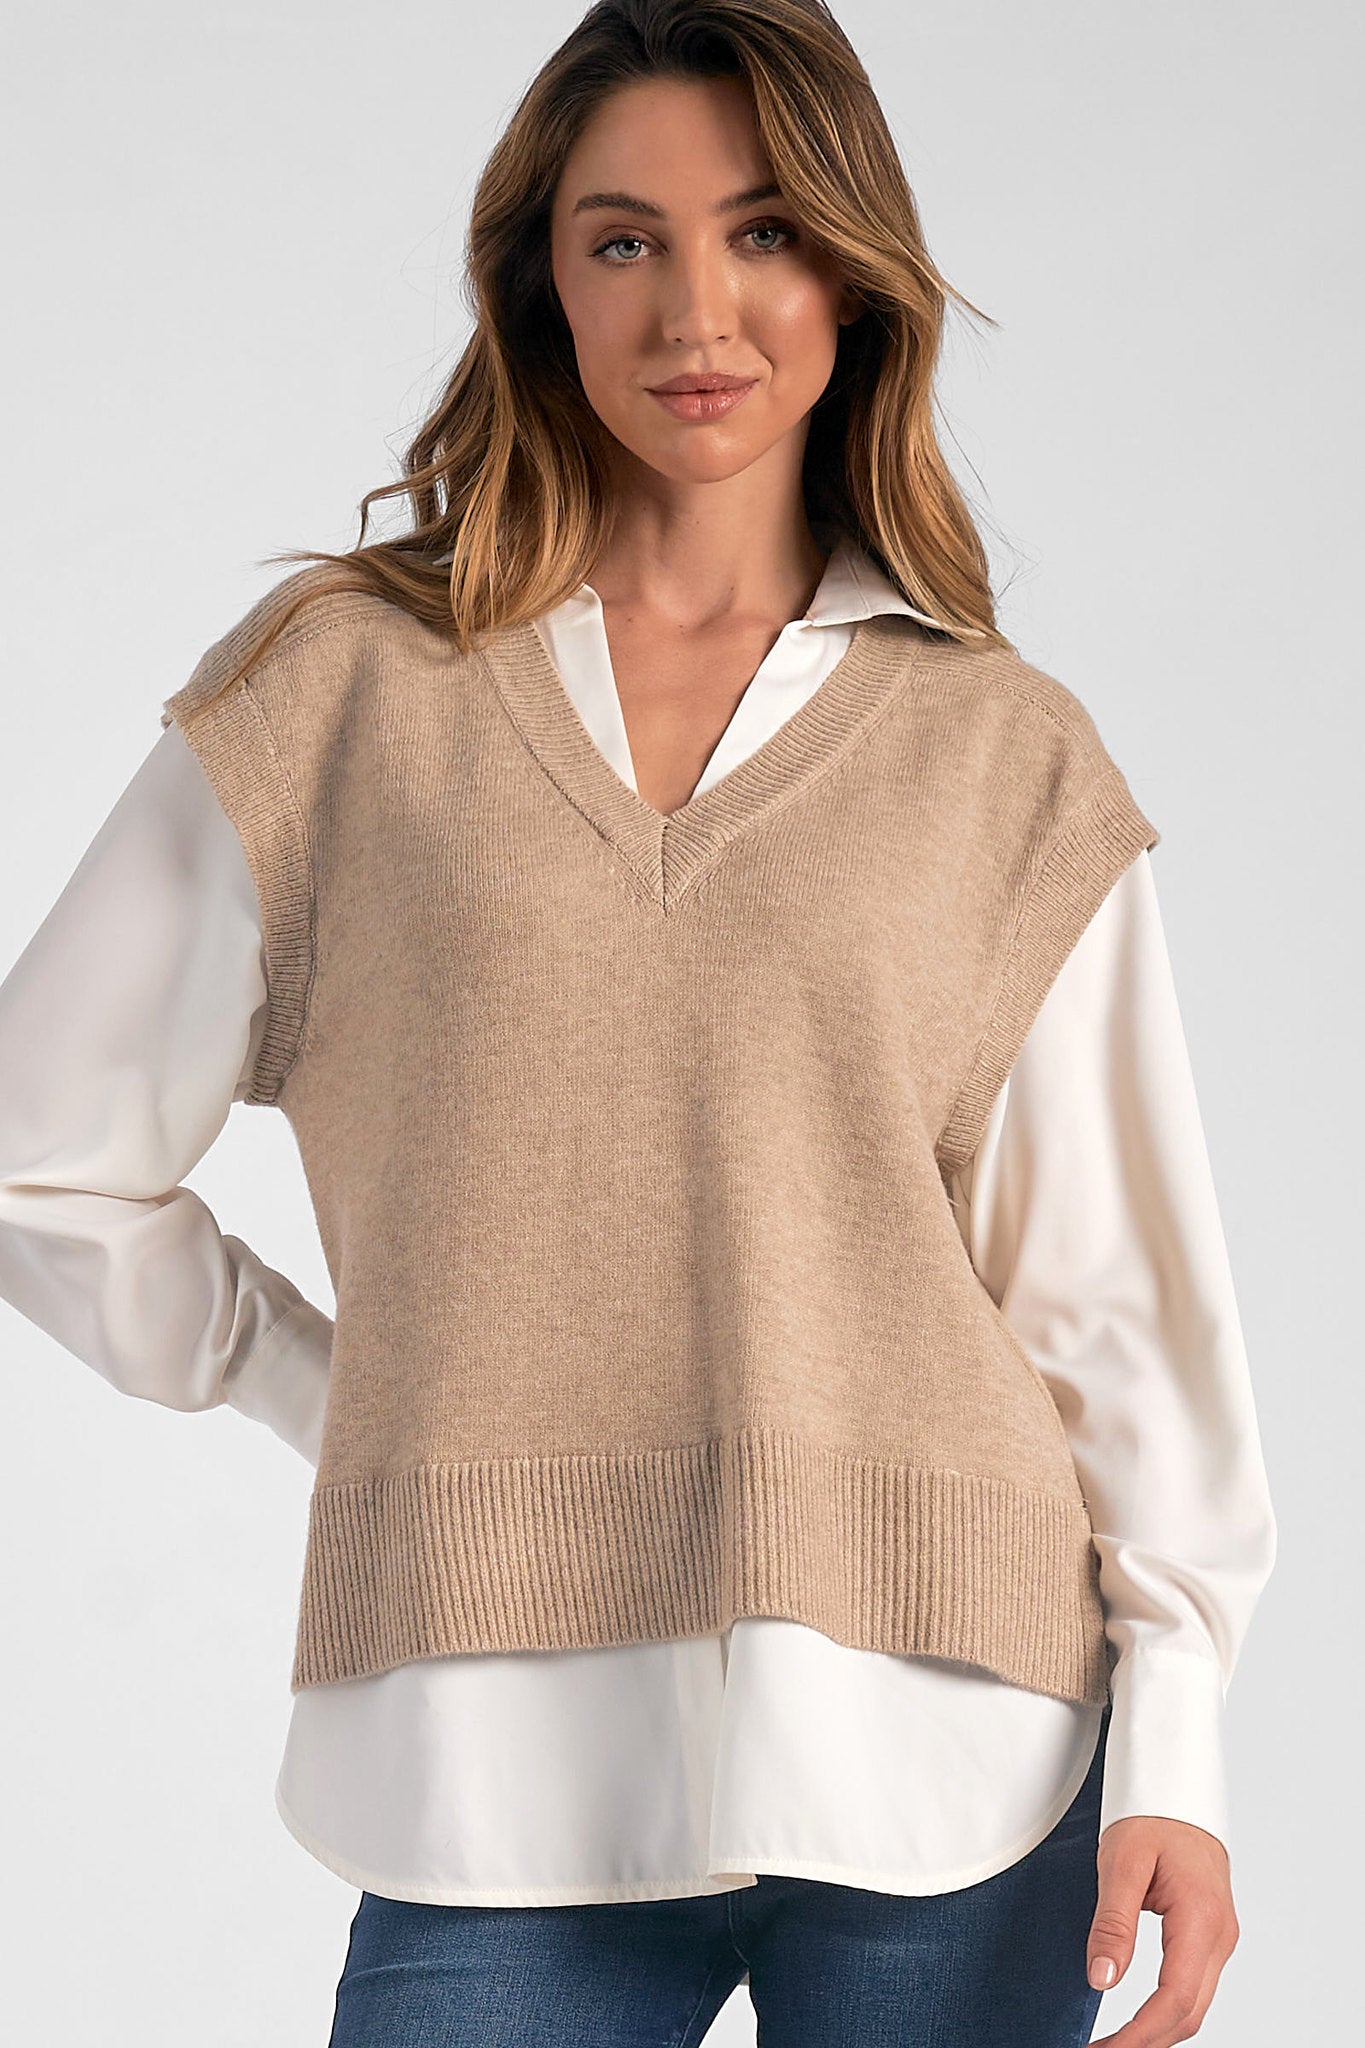 Sweater Vest/Shirt Combo